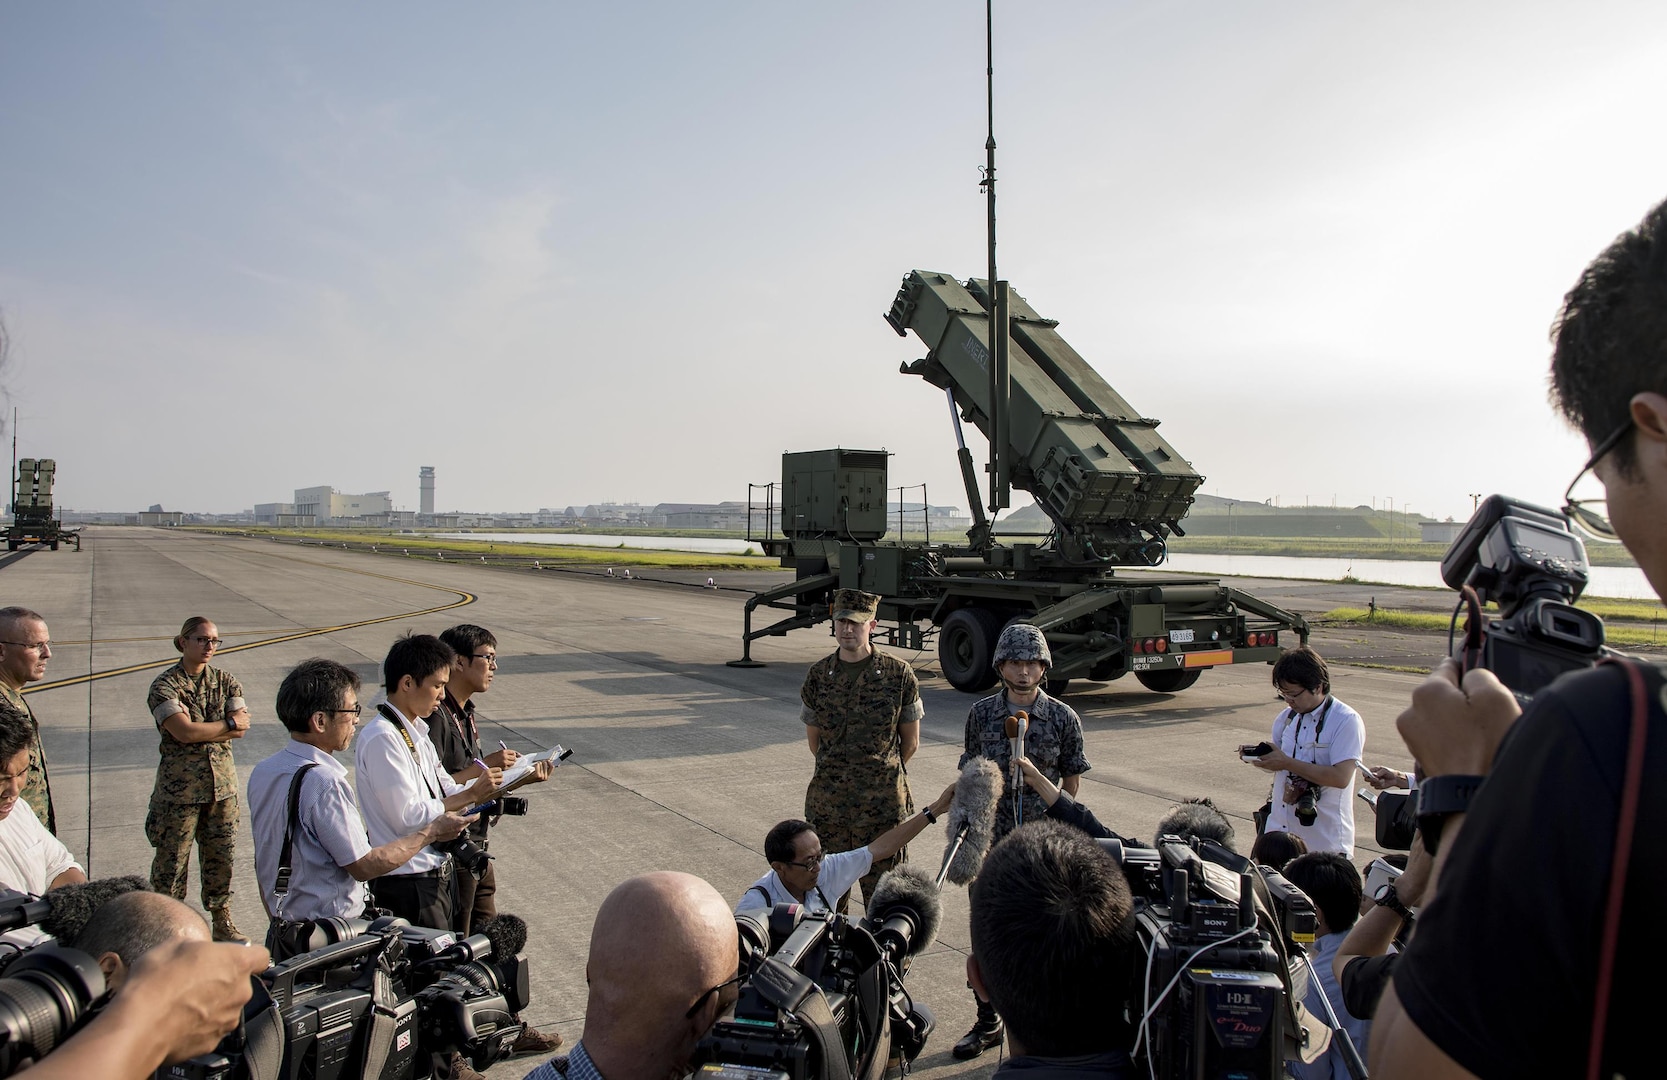 JASDF demonstrates anti-air missile capabilities